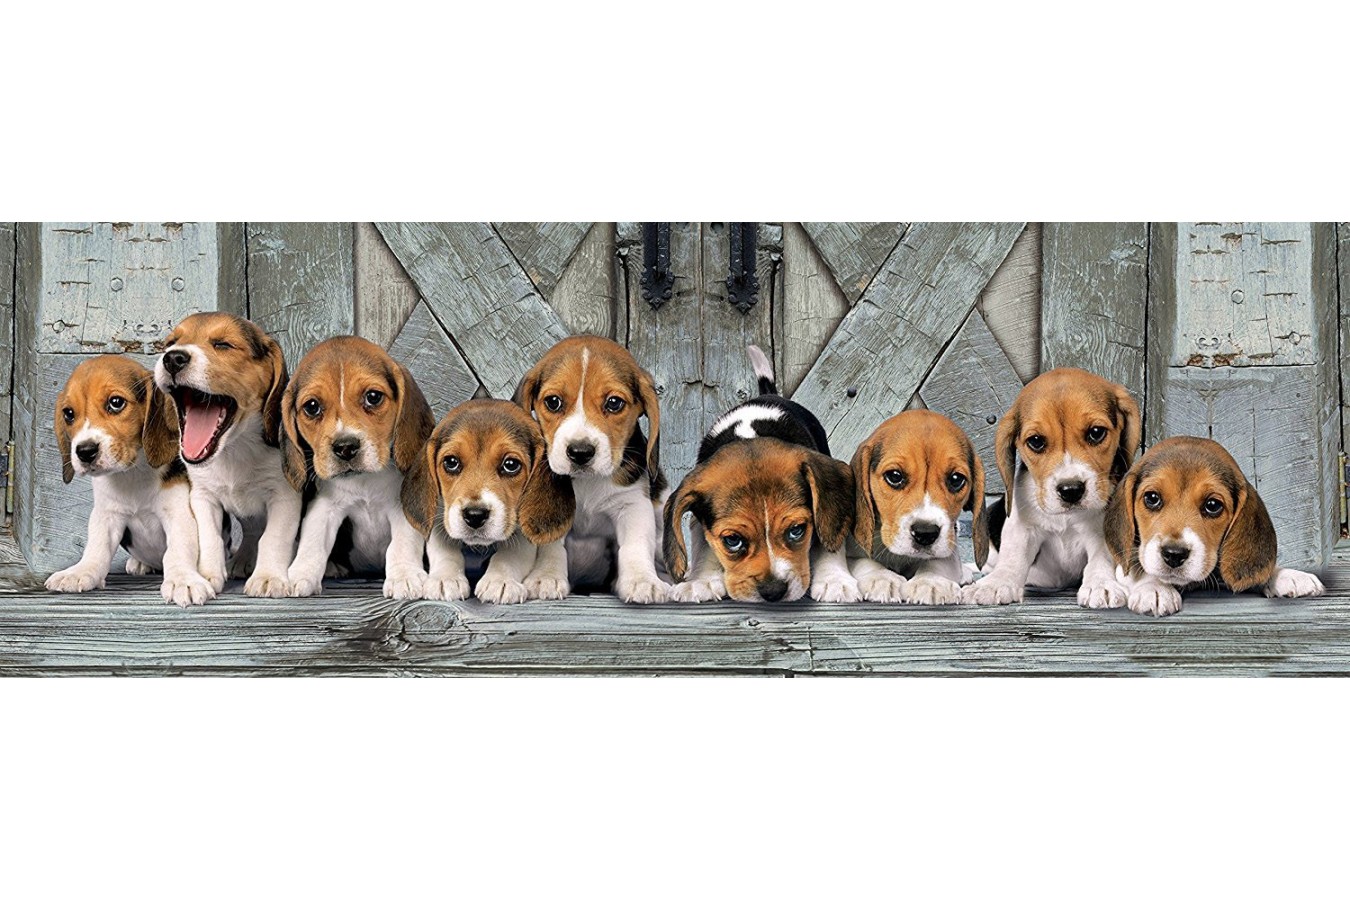 Puzzle panoramic Clementoni - Beagles, 1000 piese (62415)